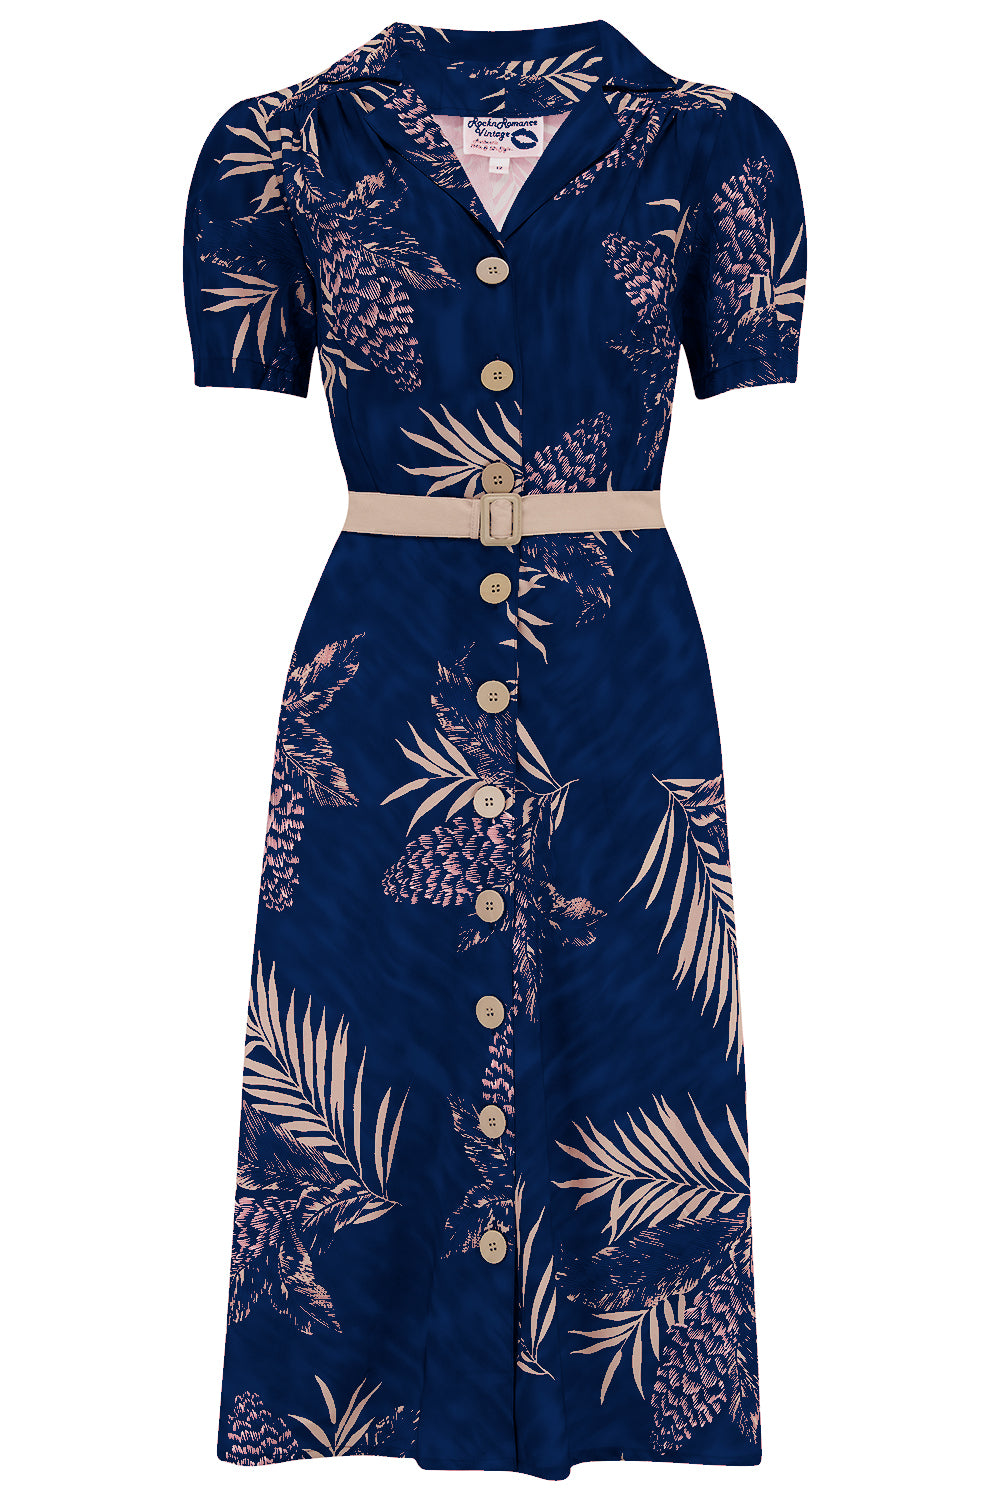 Retro Tiki Dress – Tropical, Hawaiian Dresses The Charlene Shirtwaister Dress in Sapphire Palm Print True 1950s Vintage Style £49.95 AT vintagedancer.com